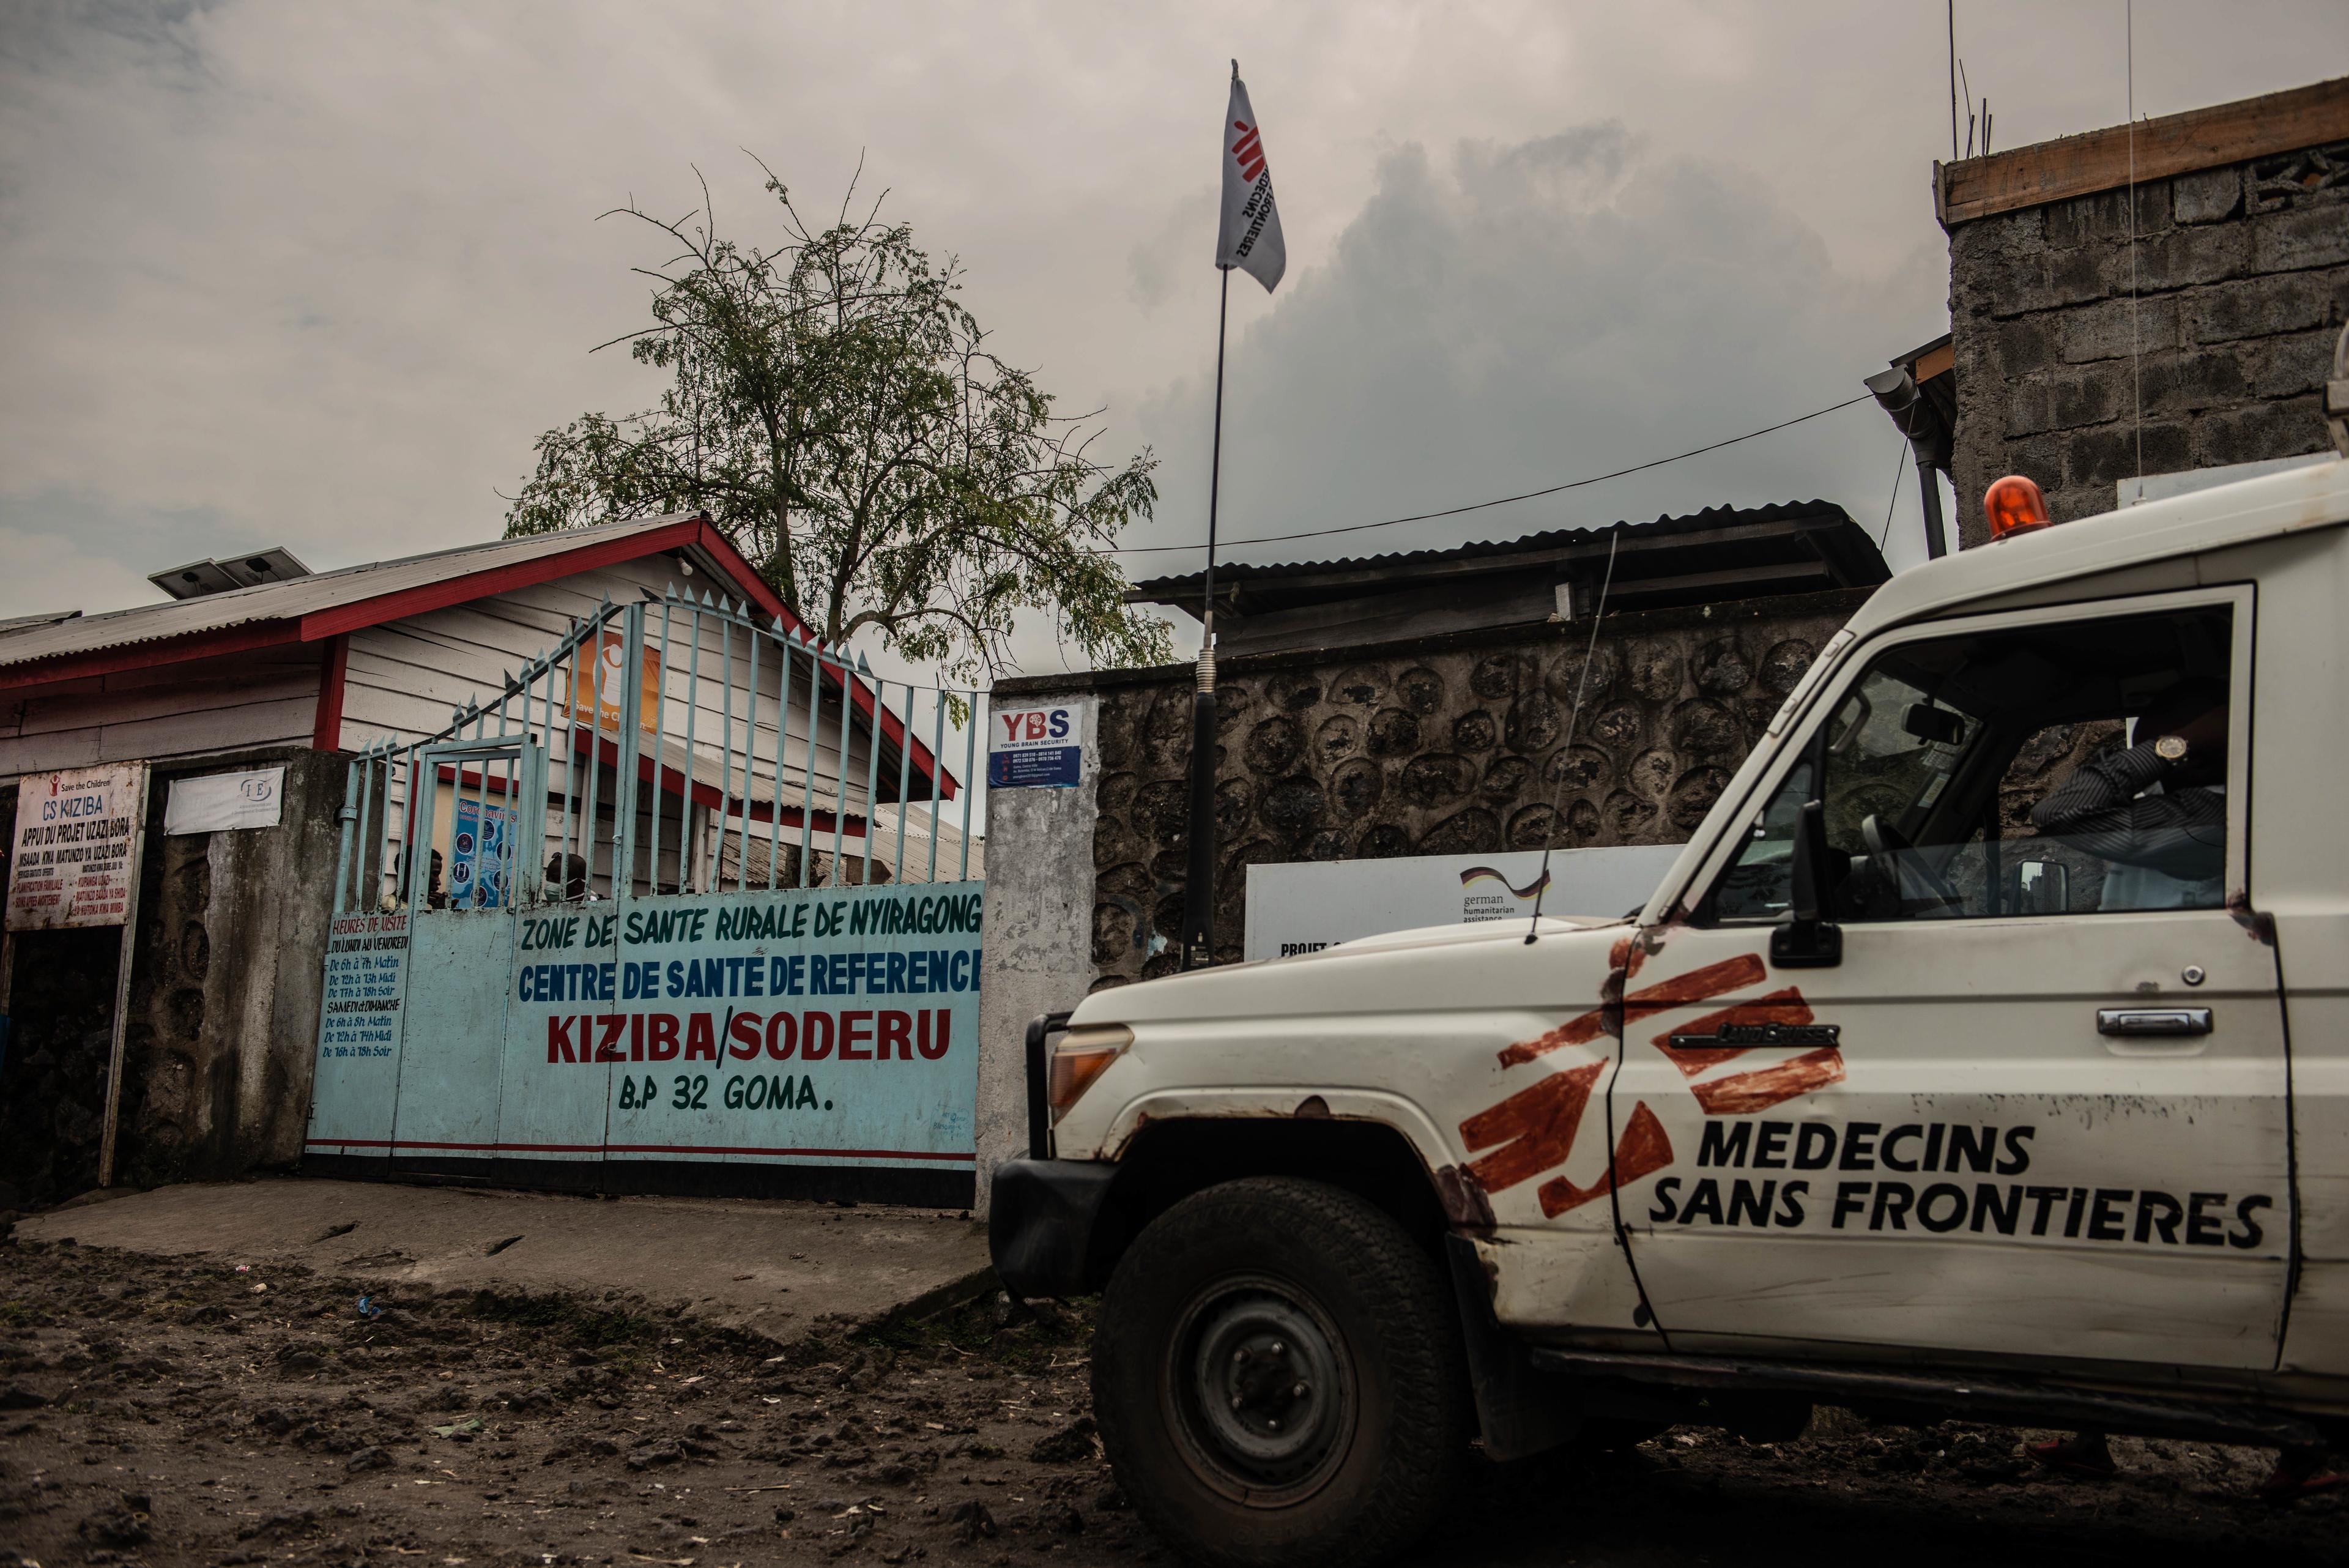 MSF team arrives at the KIZIBA referral health center in Goma (DRC)